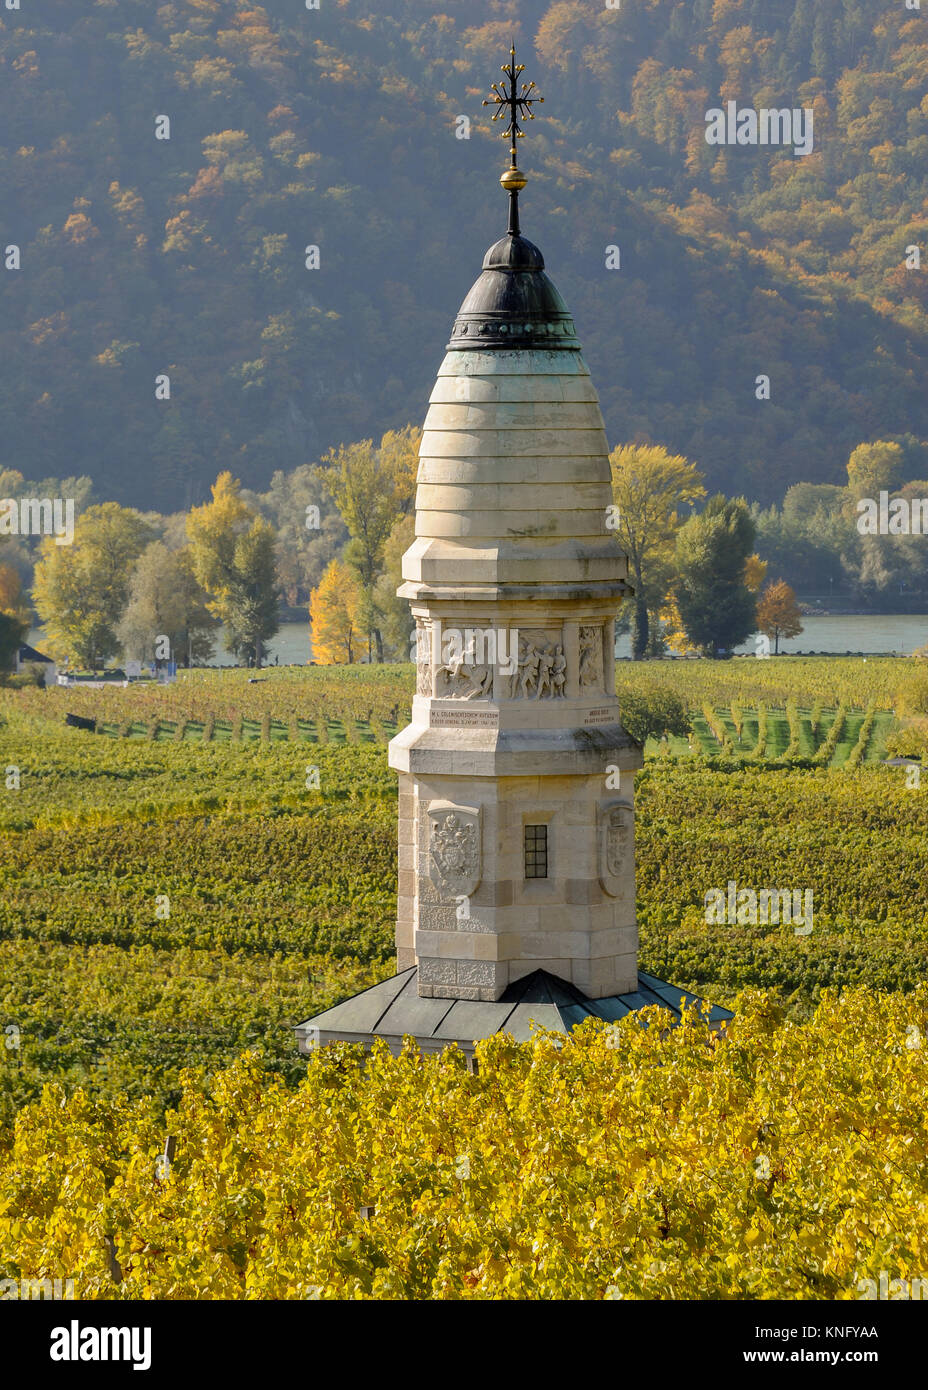 Franzosendenkmal monument near Duernstein in Wachau Austria in autumn, colored leaves Stock Photo